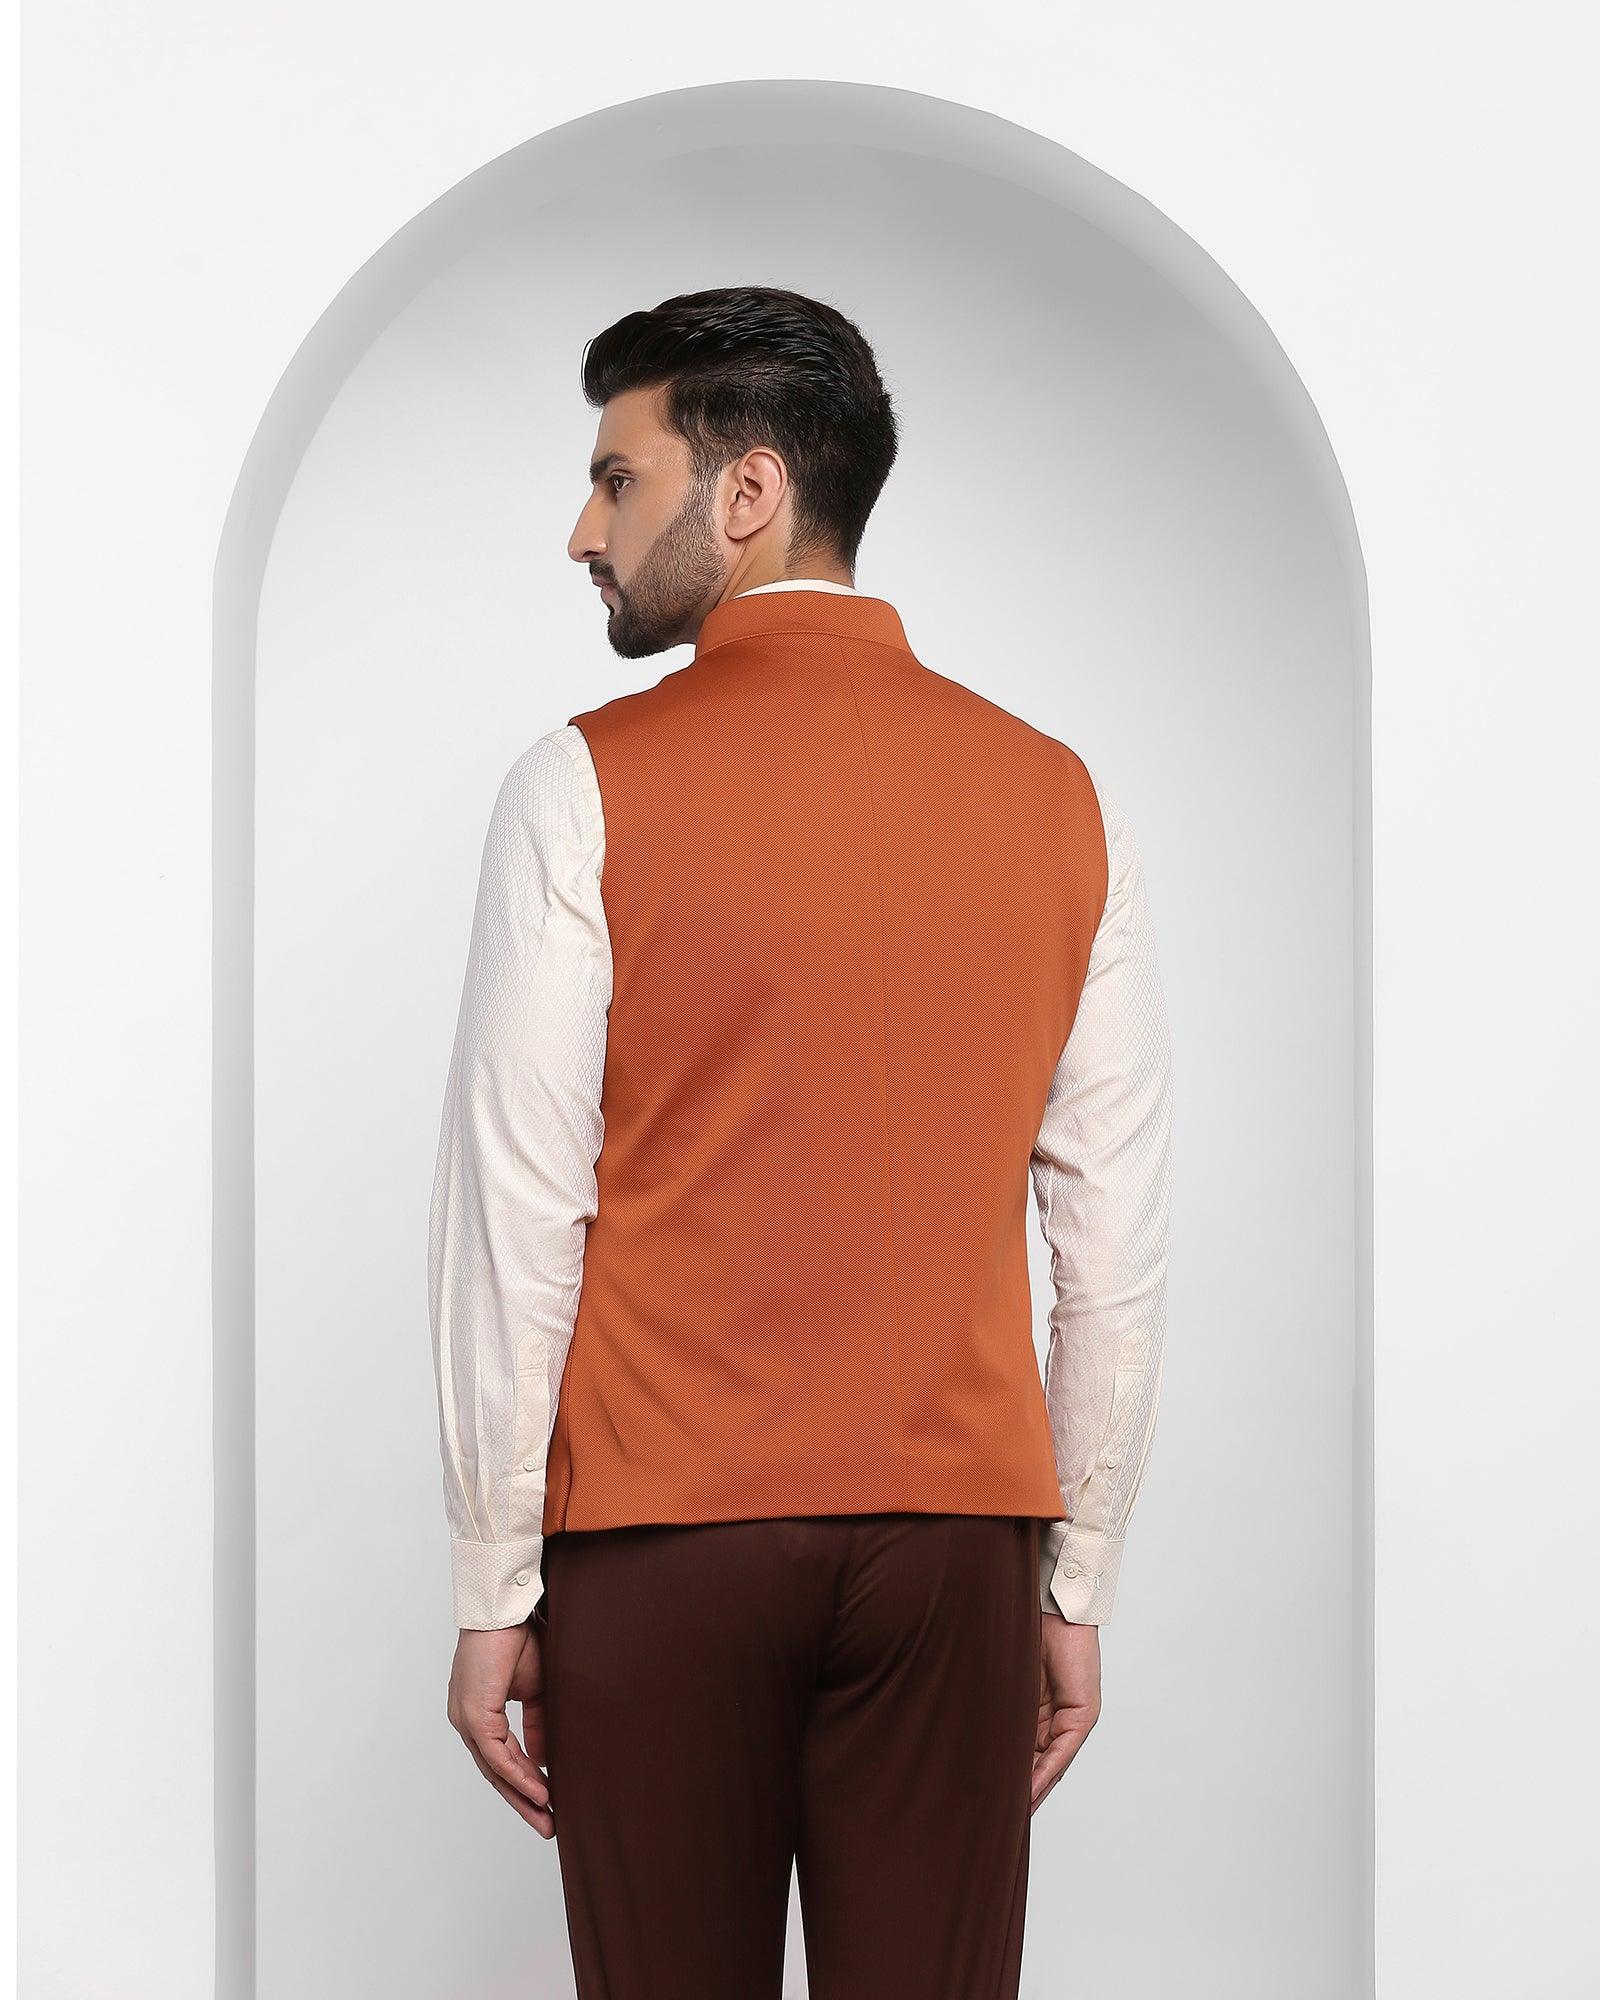 Bandhgala Formal Orange Solid Waistcoat - Aphrodo